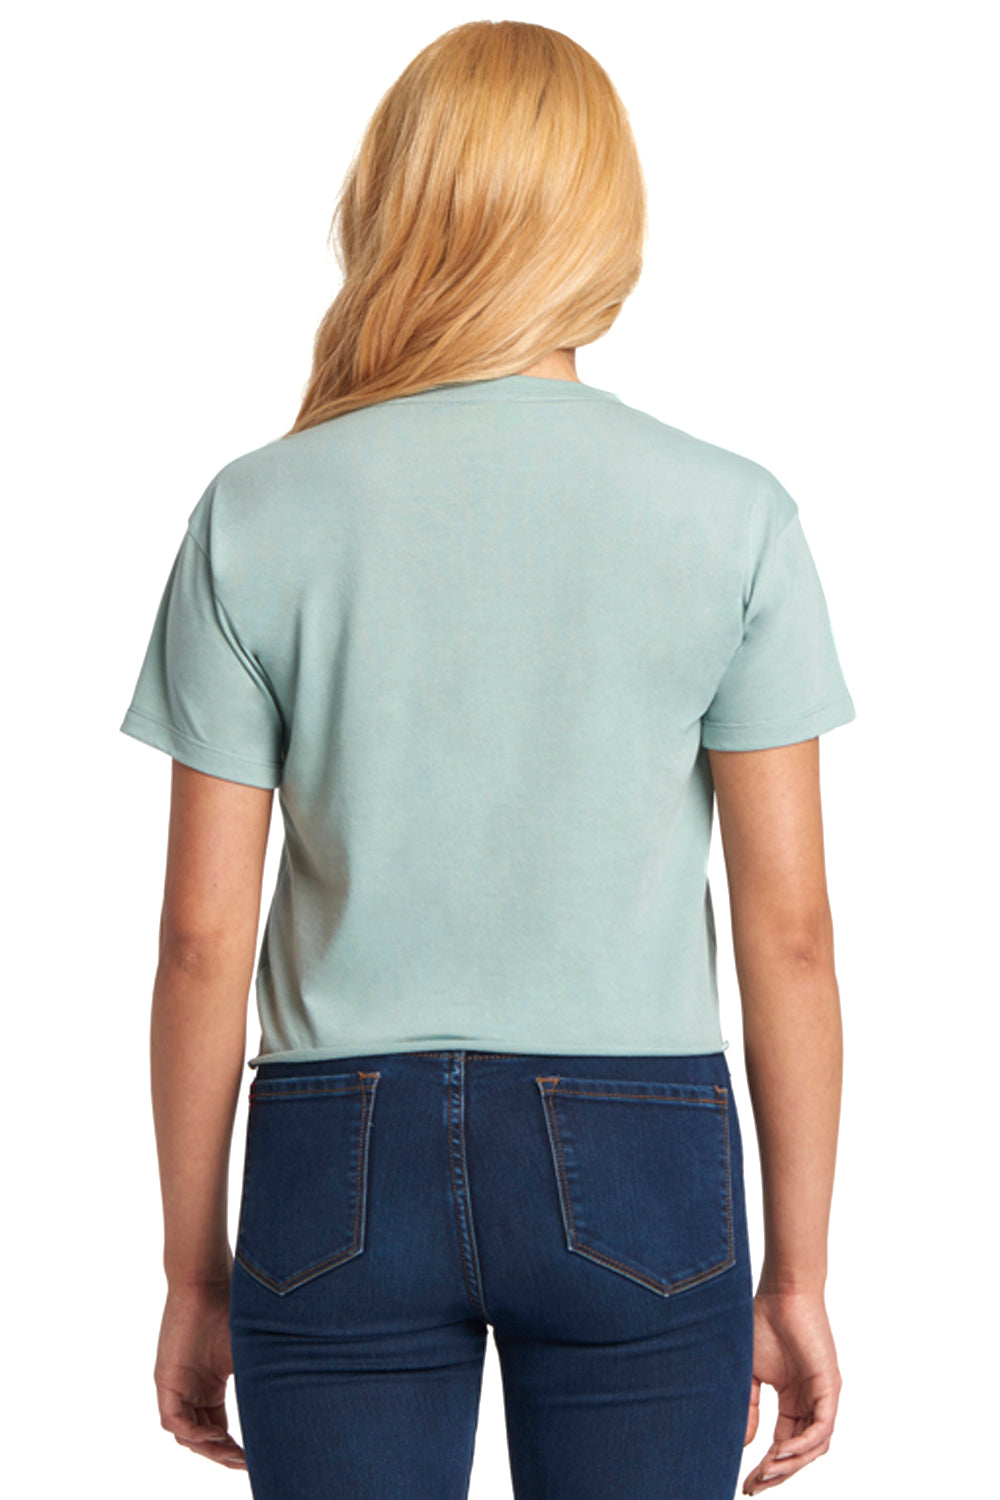 Next Level N5080 Womens Festival Cali Crop Short Sleeve Crewneck T-Shirt Stonewashed Green Back